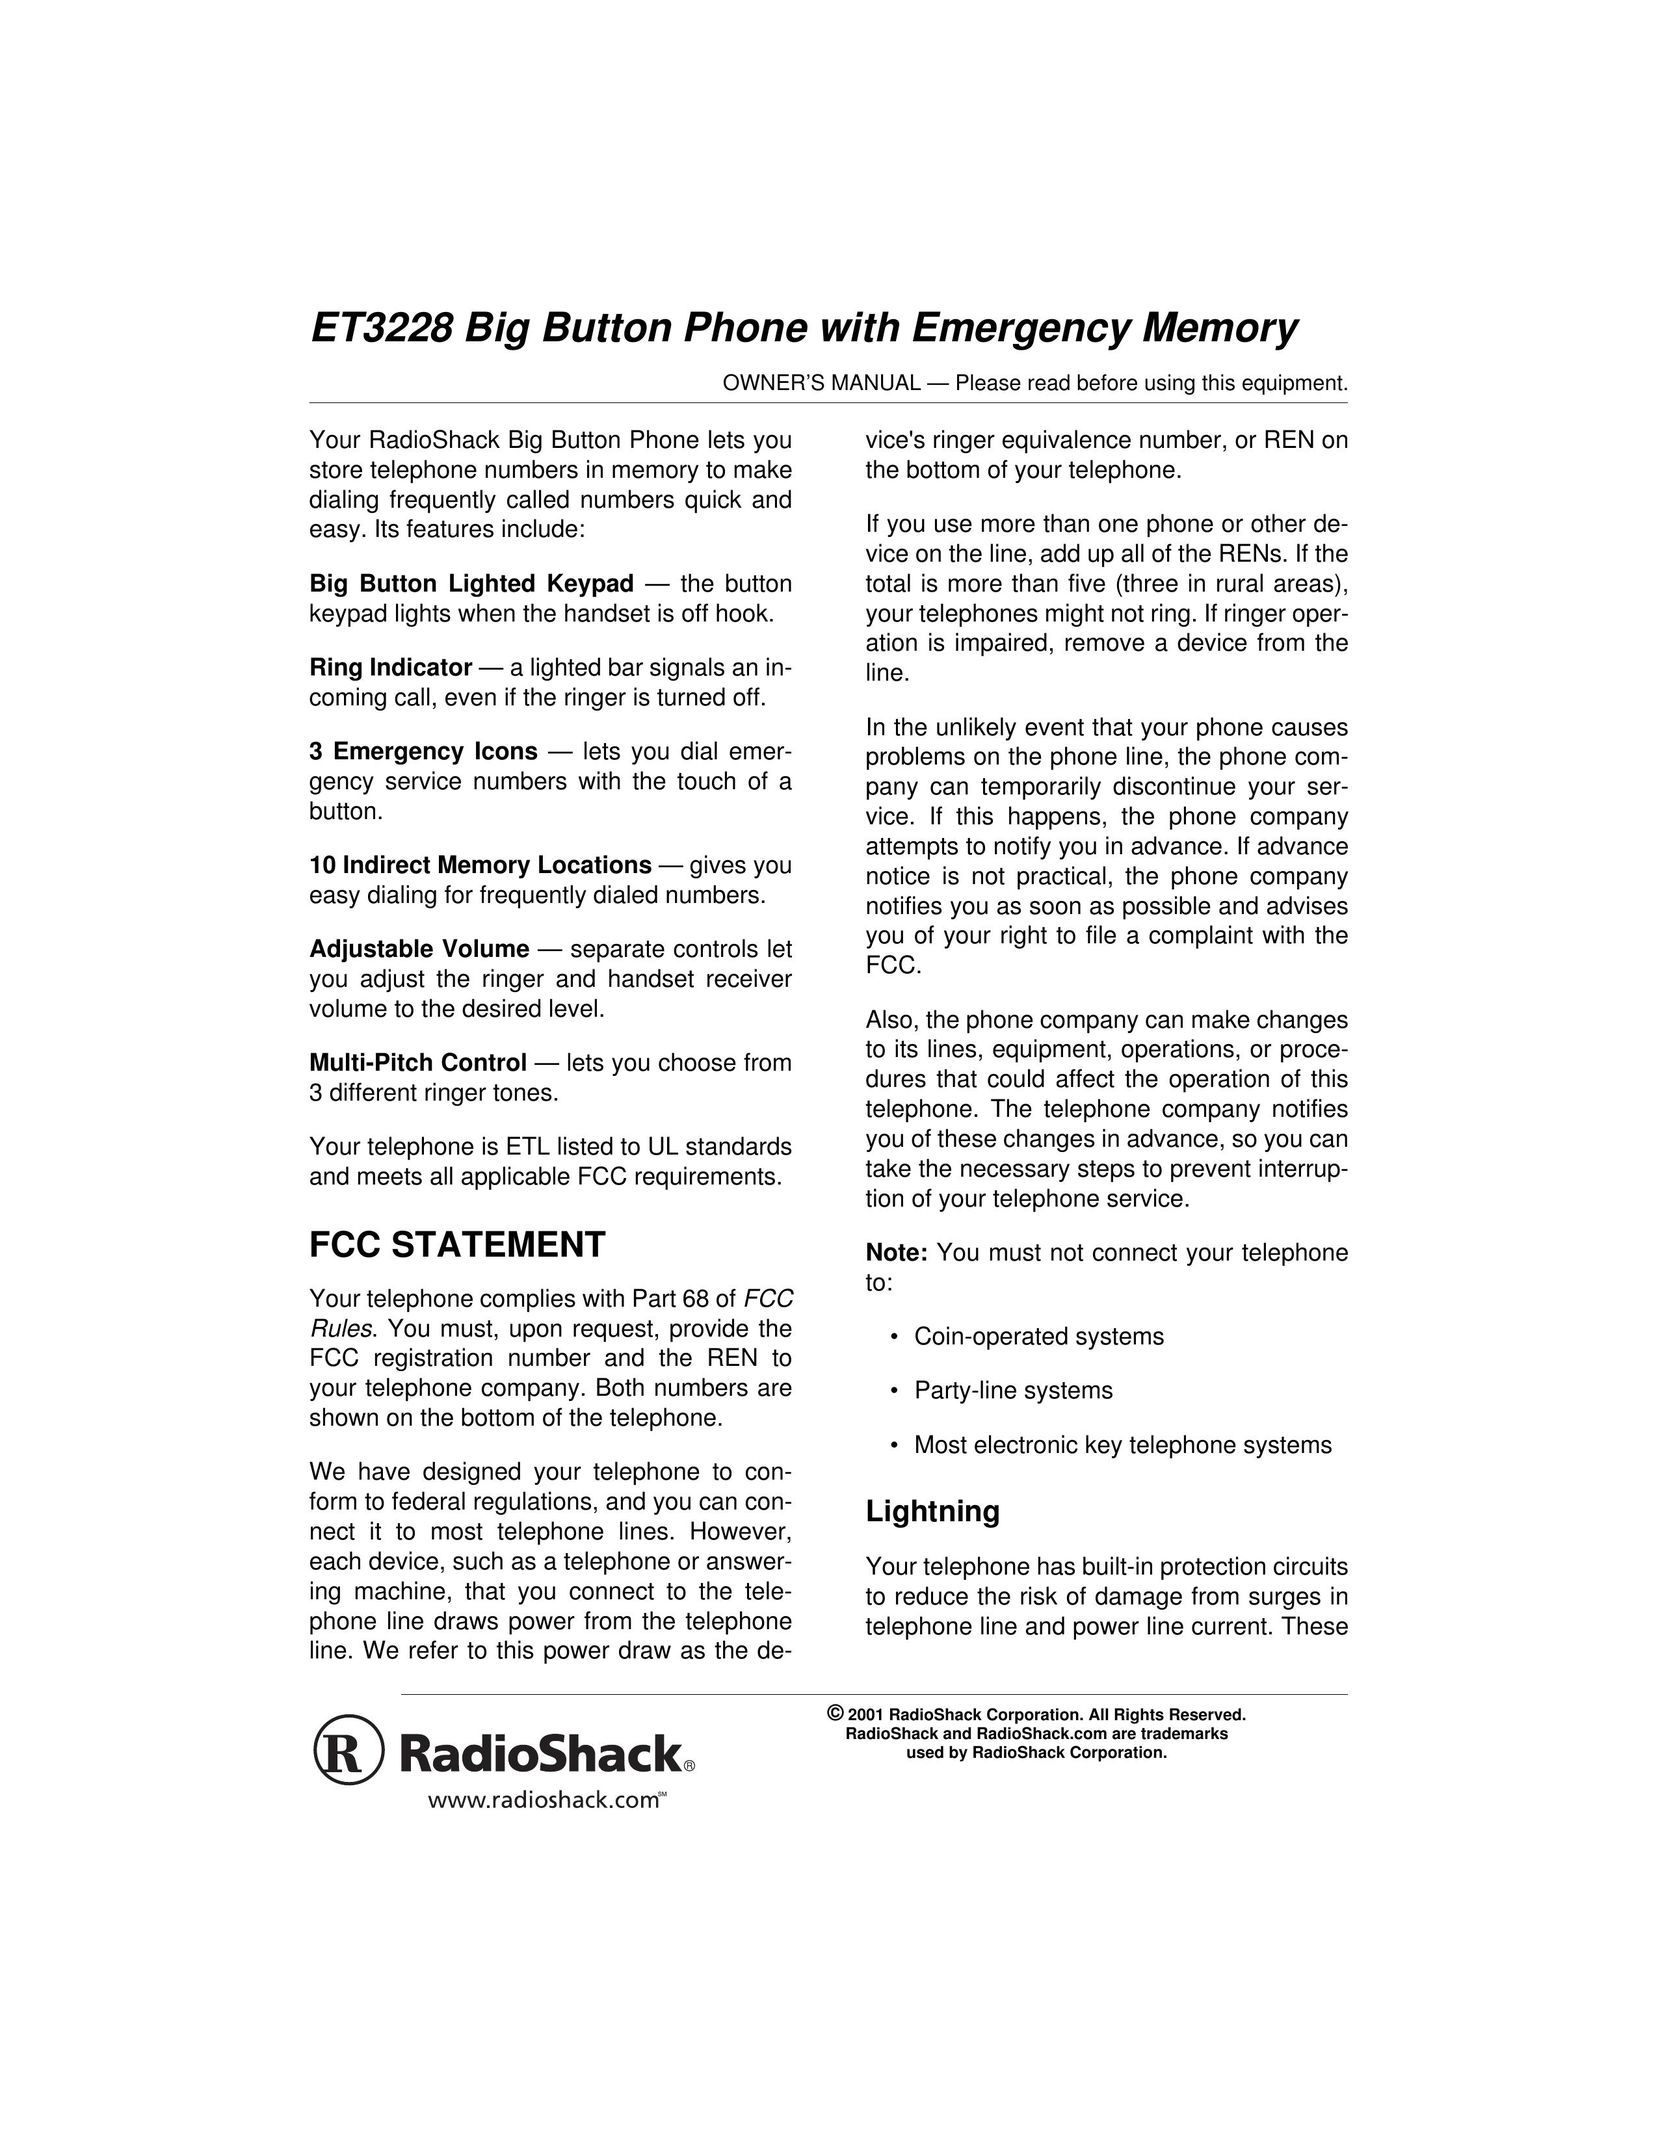 Radio Shack ET3228 Telephone User Manual